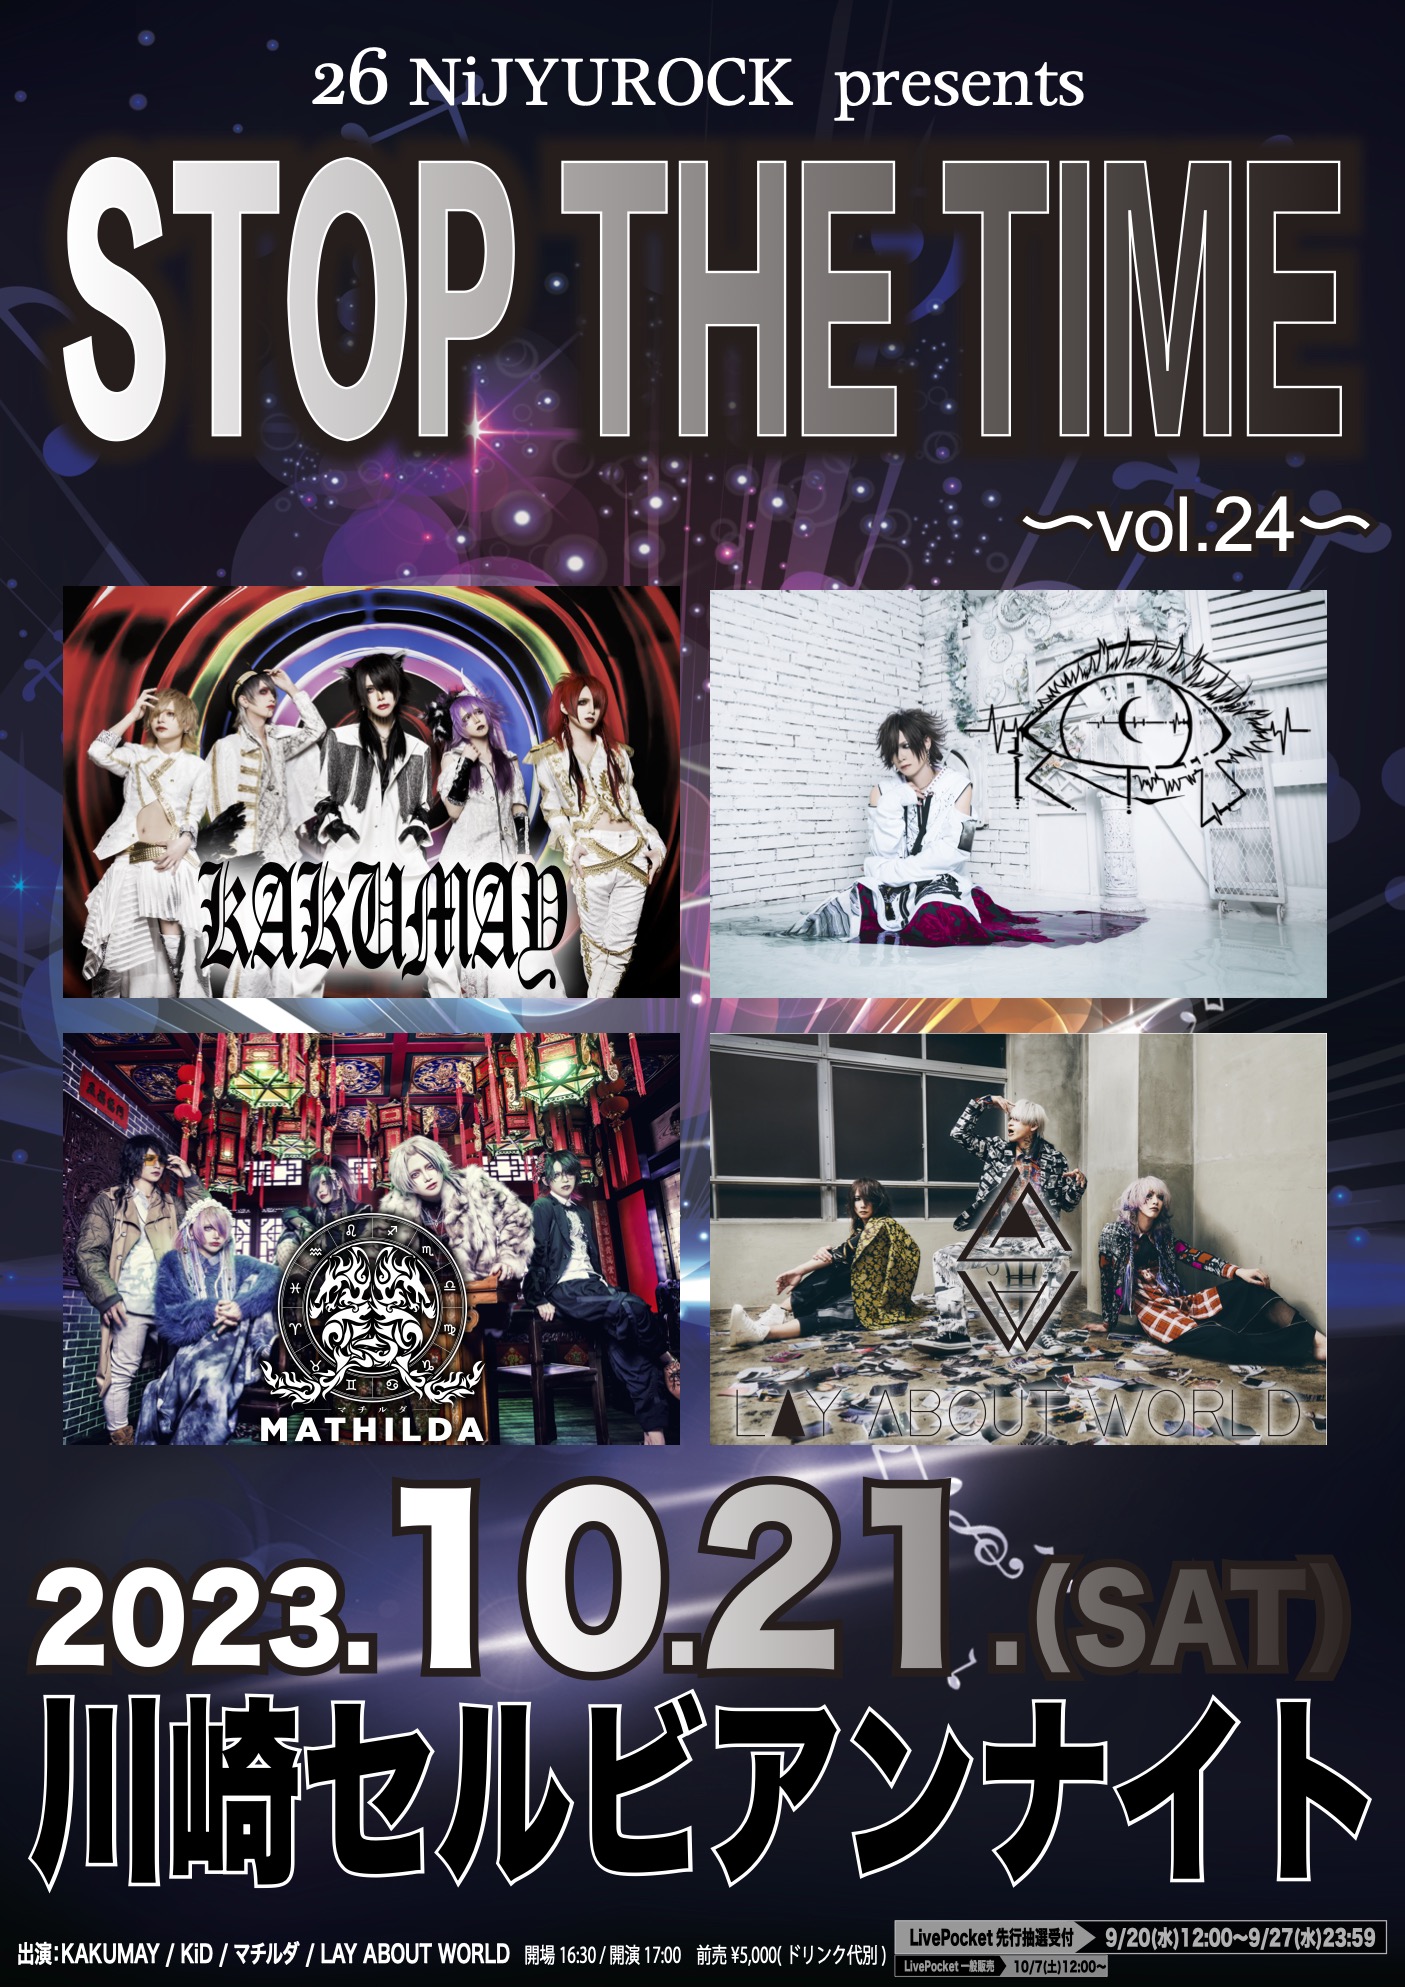 26 NiJYUROCK presents STOP THE TIME〜vol.24〜